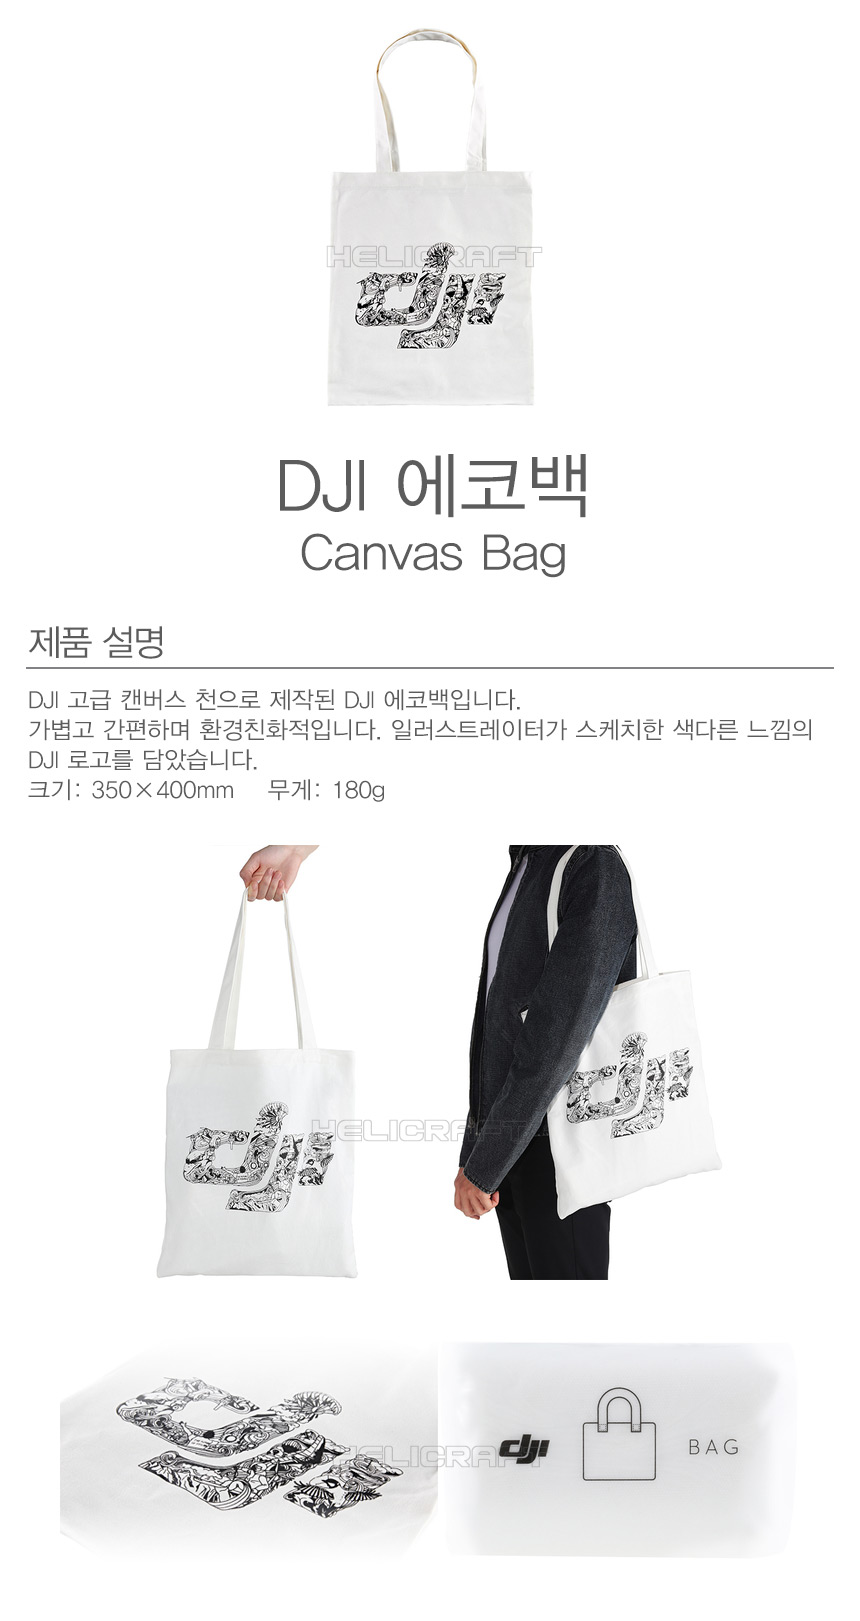 DJI 에코백 canvas Bag